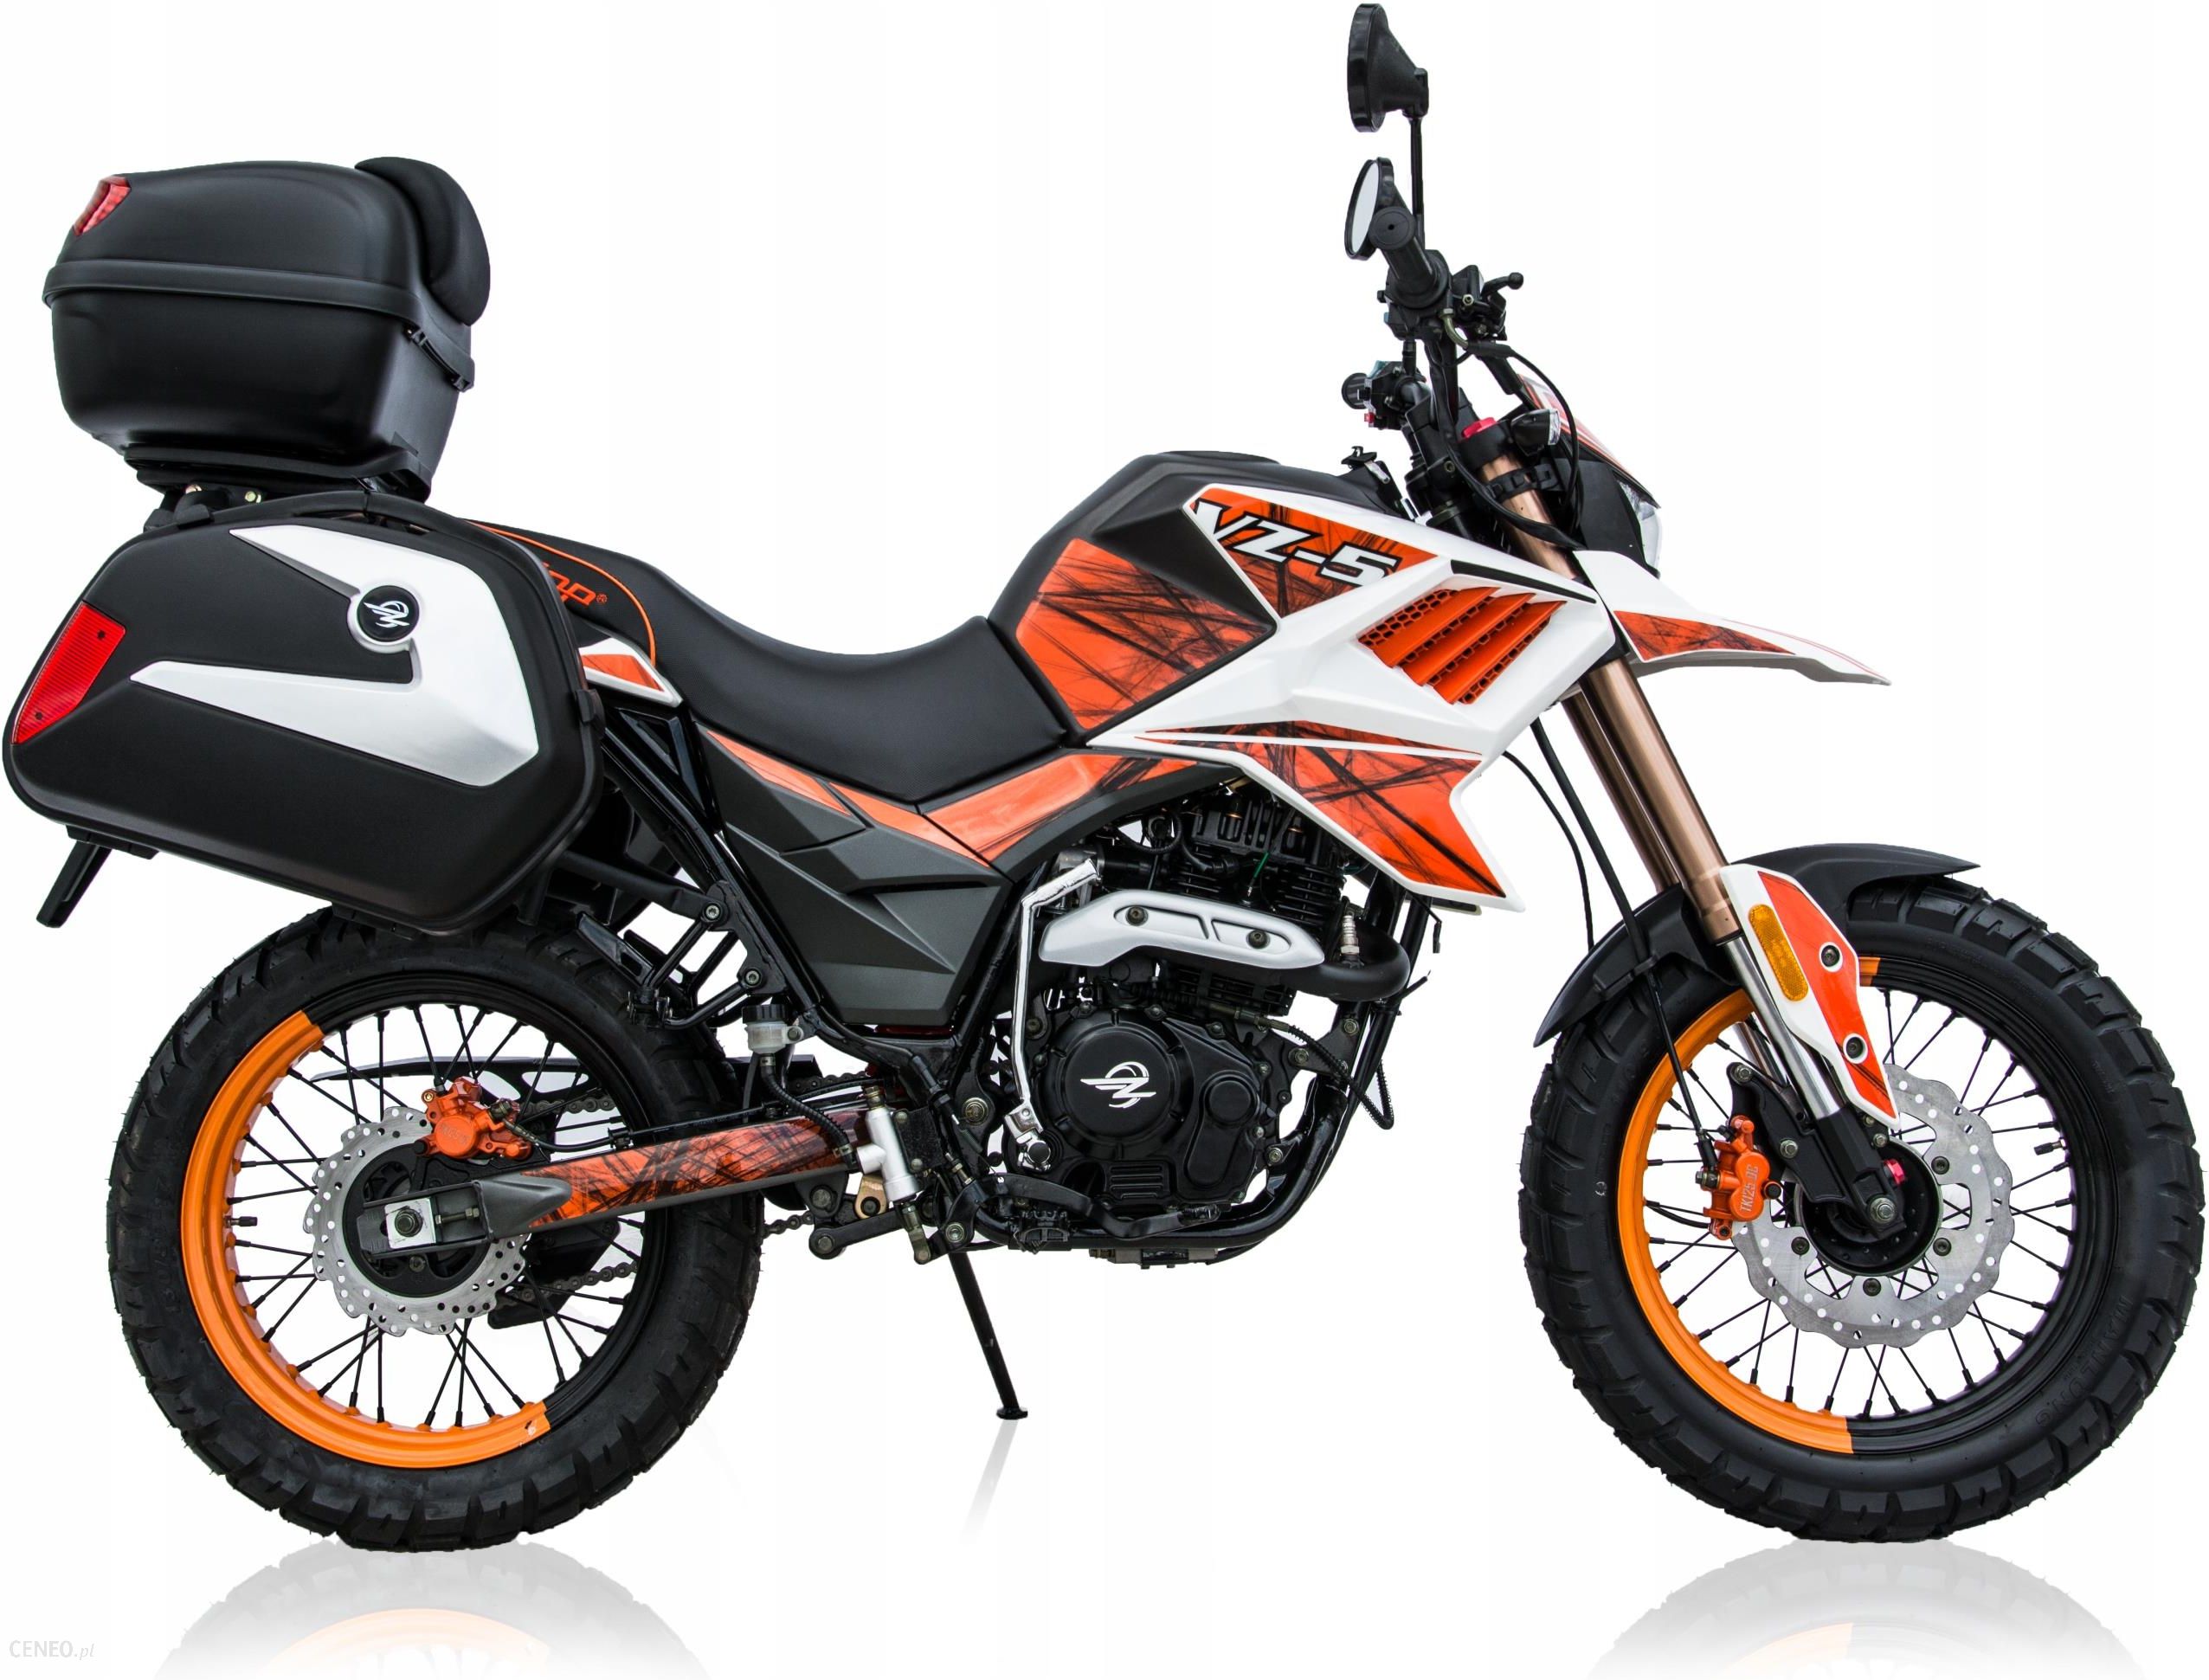 Motocykl Zipp Vz 5 Enduro Cross 125 Kufry Gratis Opinie I Ceny Na Ceneo Pl